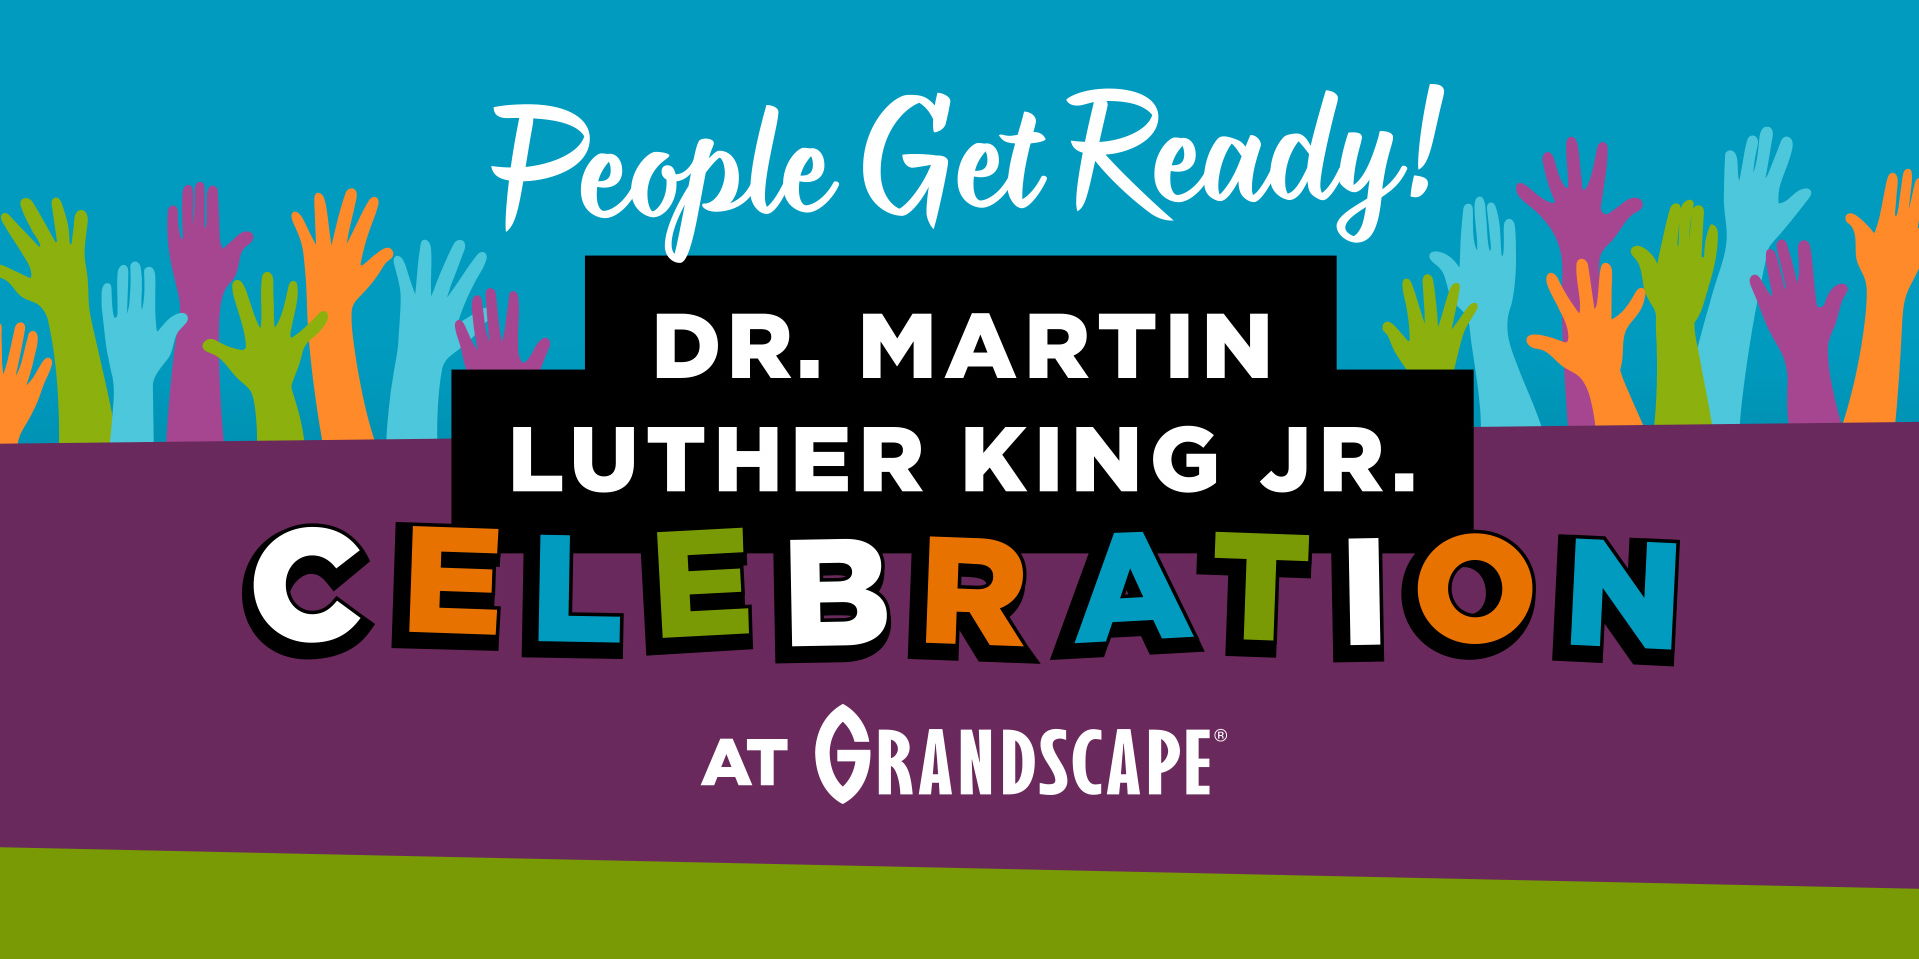 People Get Ready! Dr. Martin Luther King Jr. Celebration promotional image